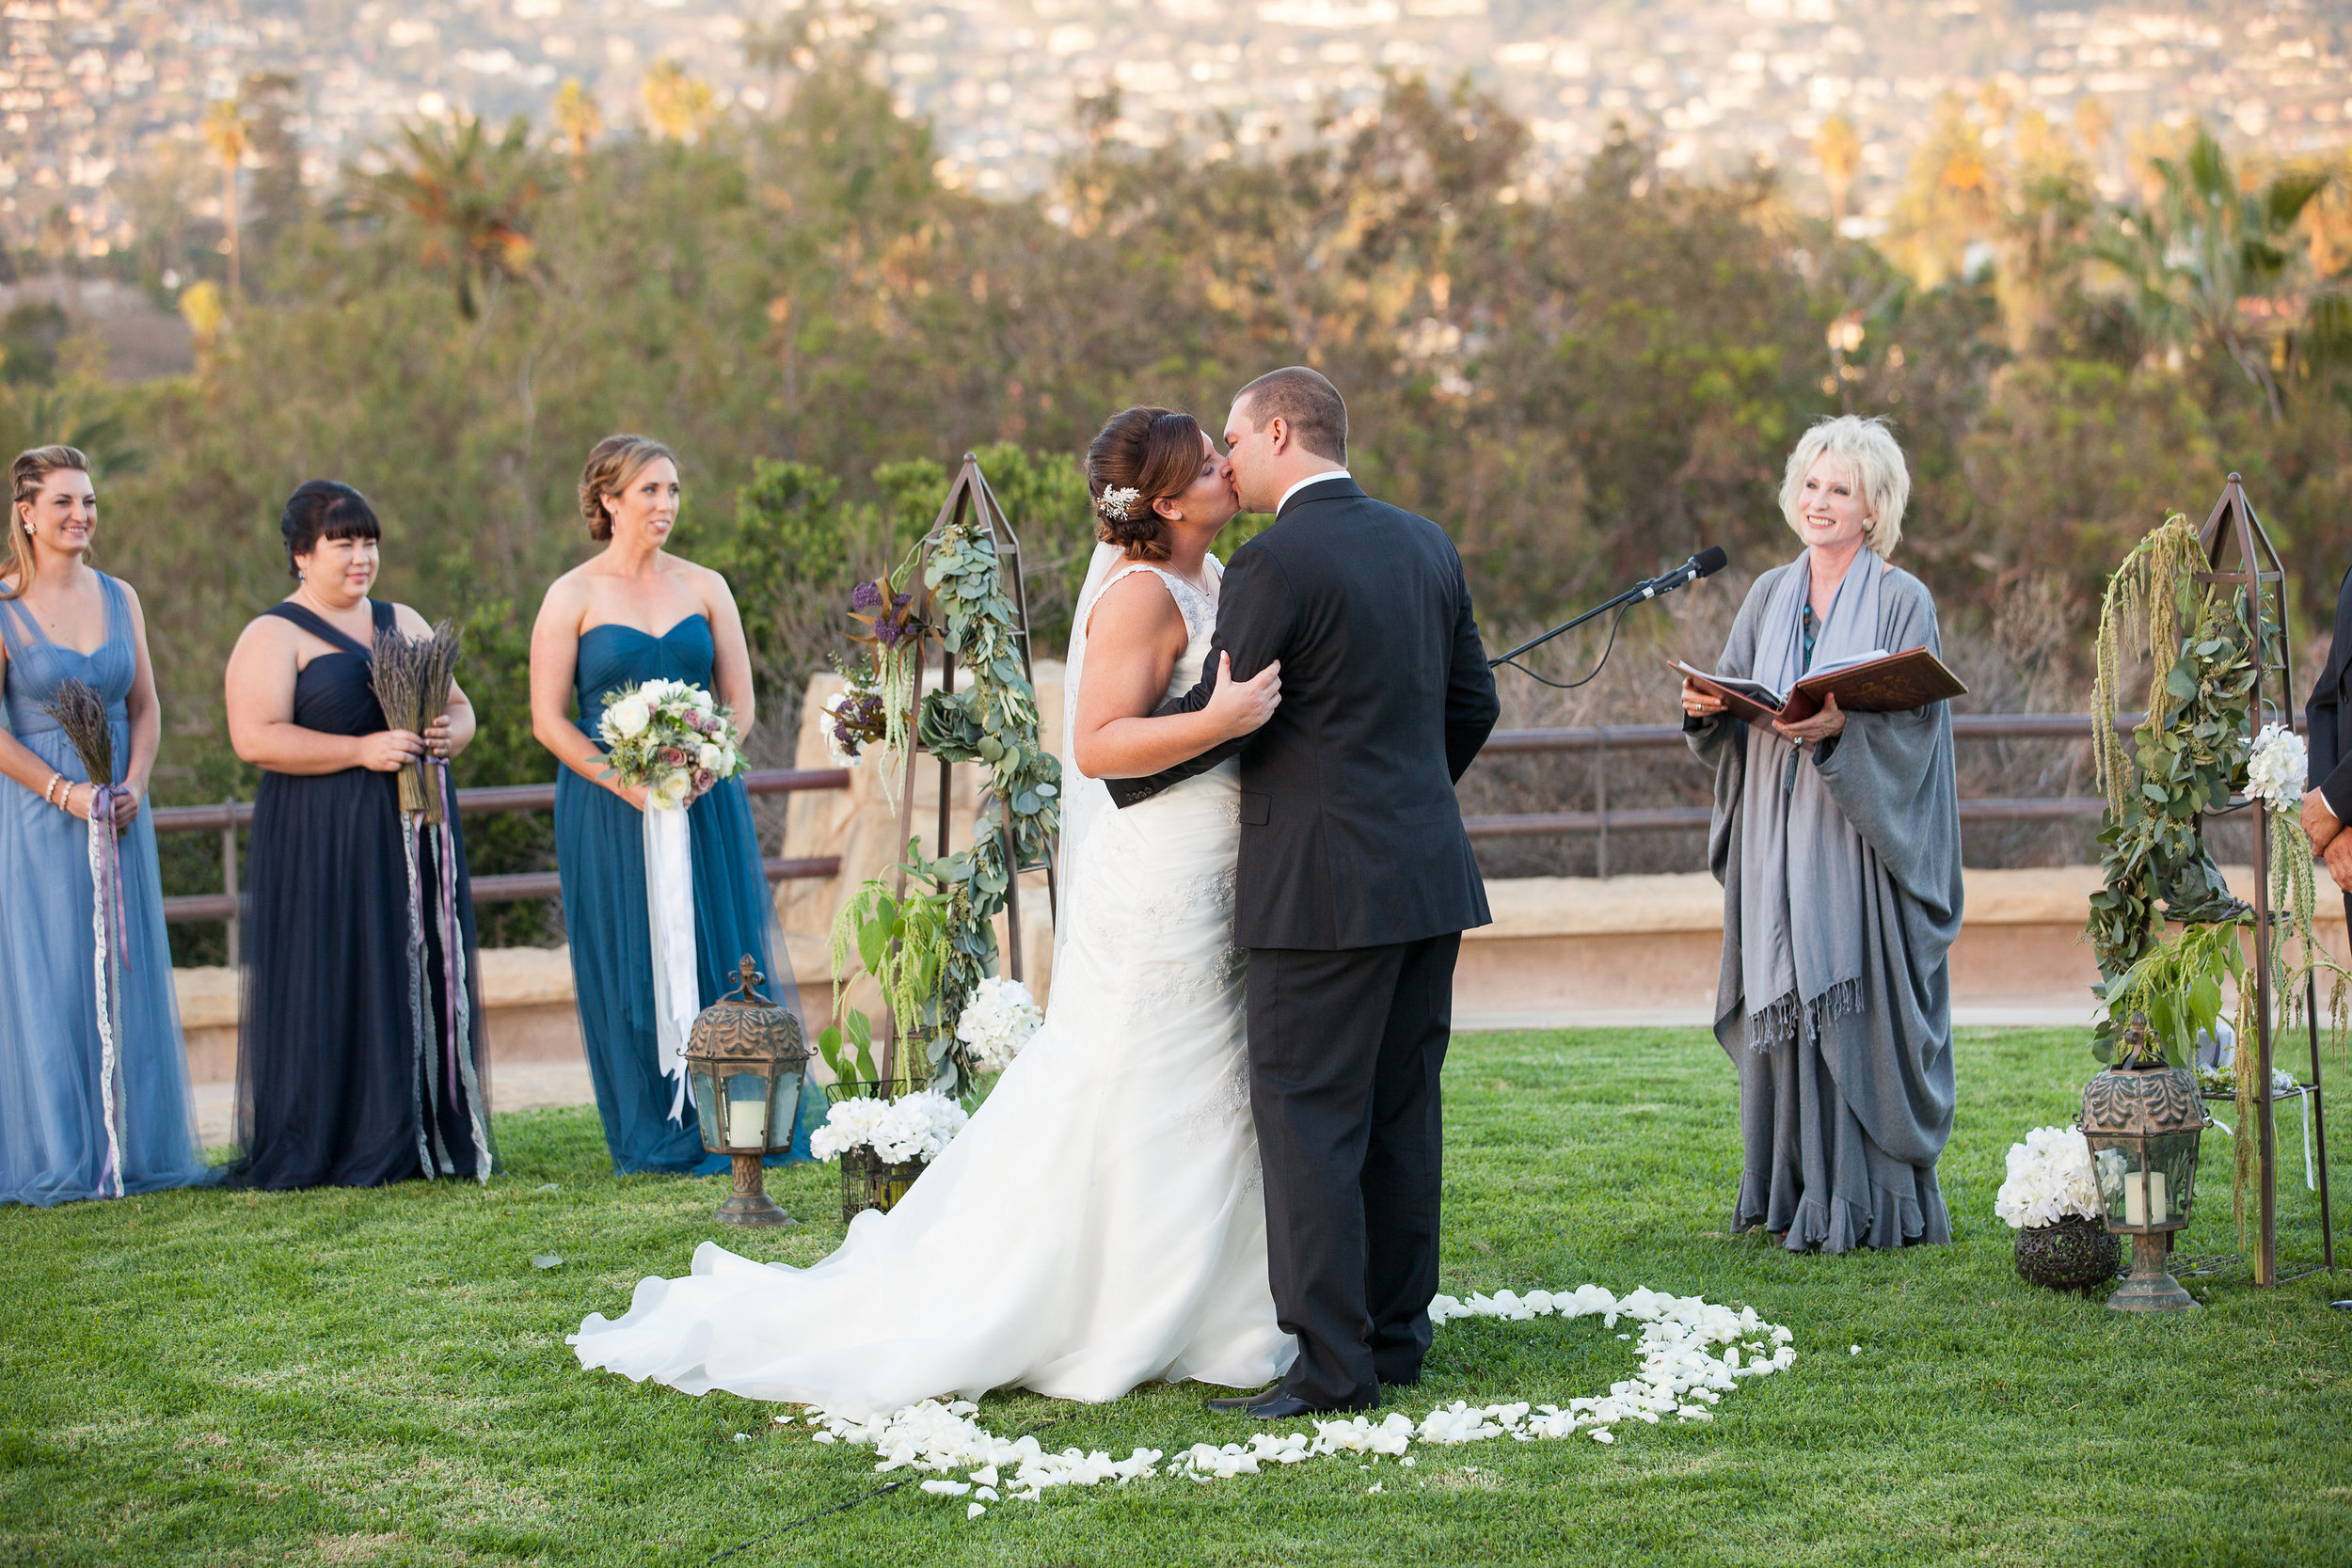 Santa Barbara Wedding Officiant | Miriam Lindbeck | Non-Denominational Minister Serving Southern California